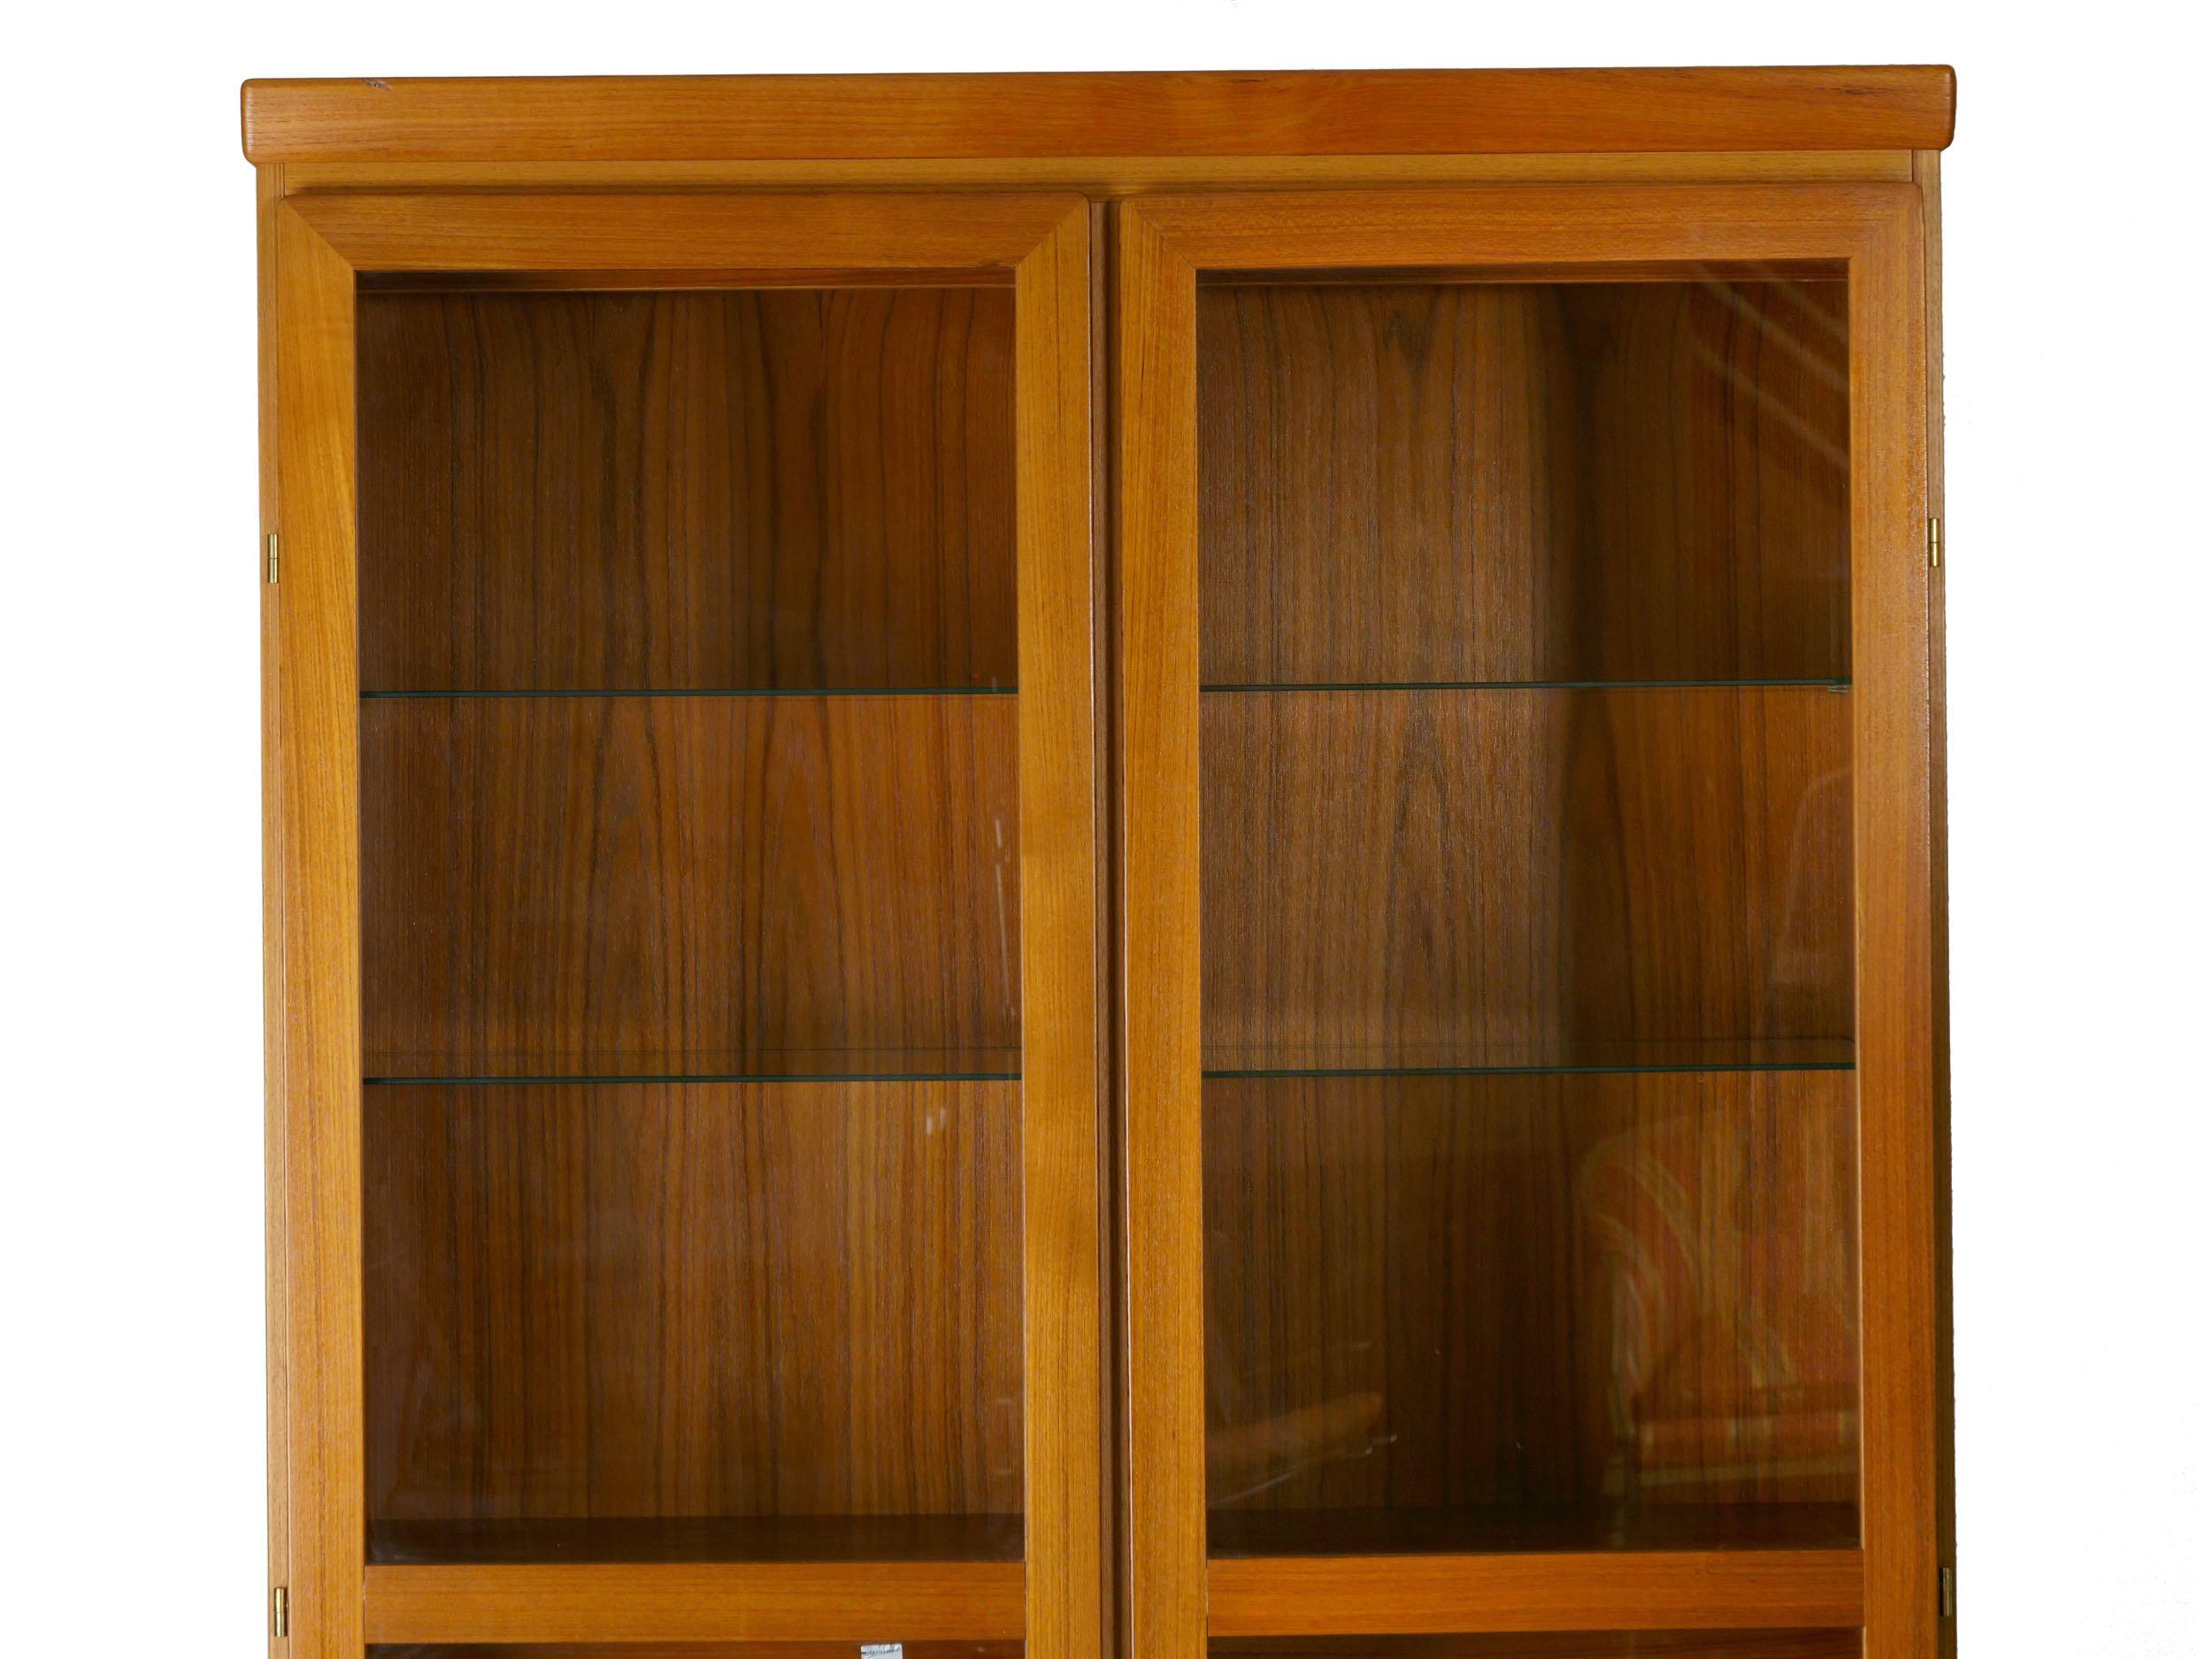 20th Century Danish Mid-Century Modern Teak Display Cabinet Bookshelf by Skovby